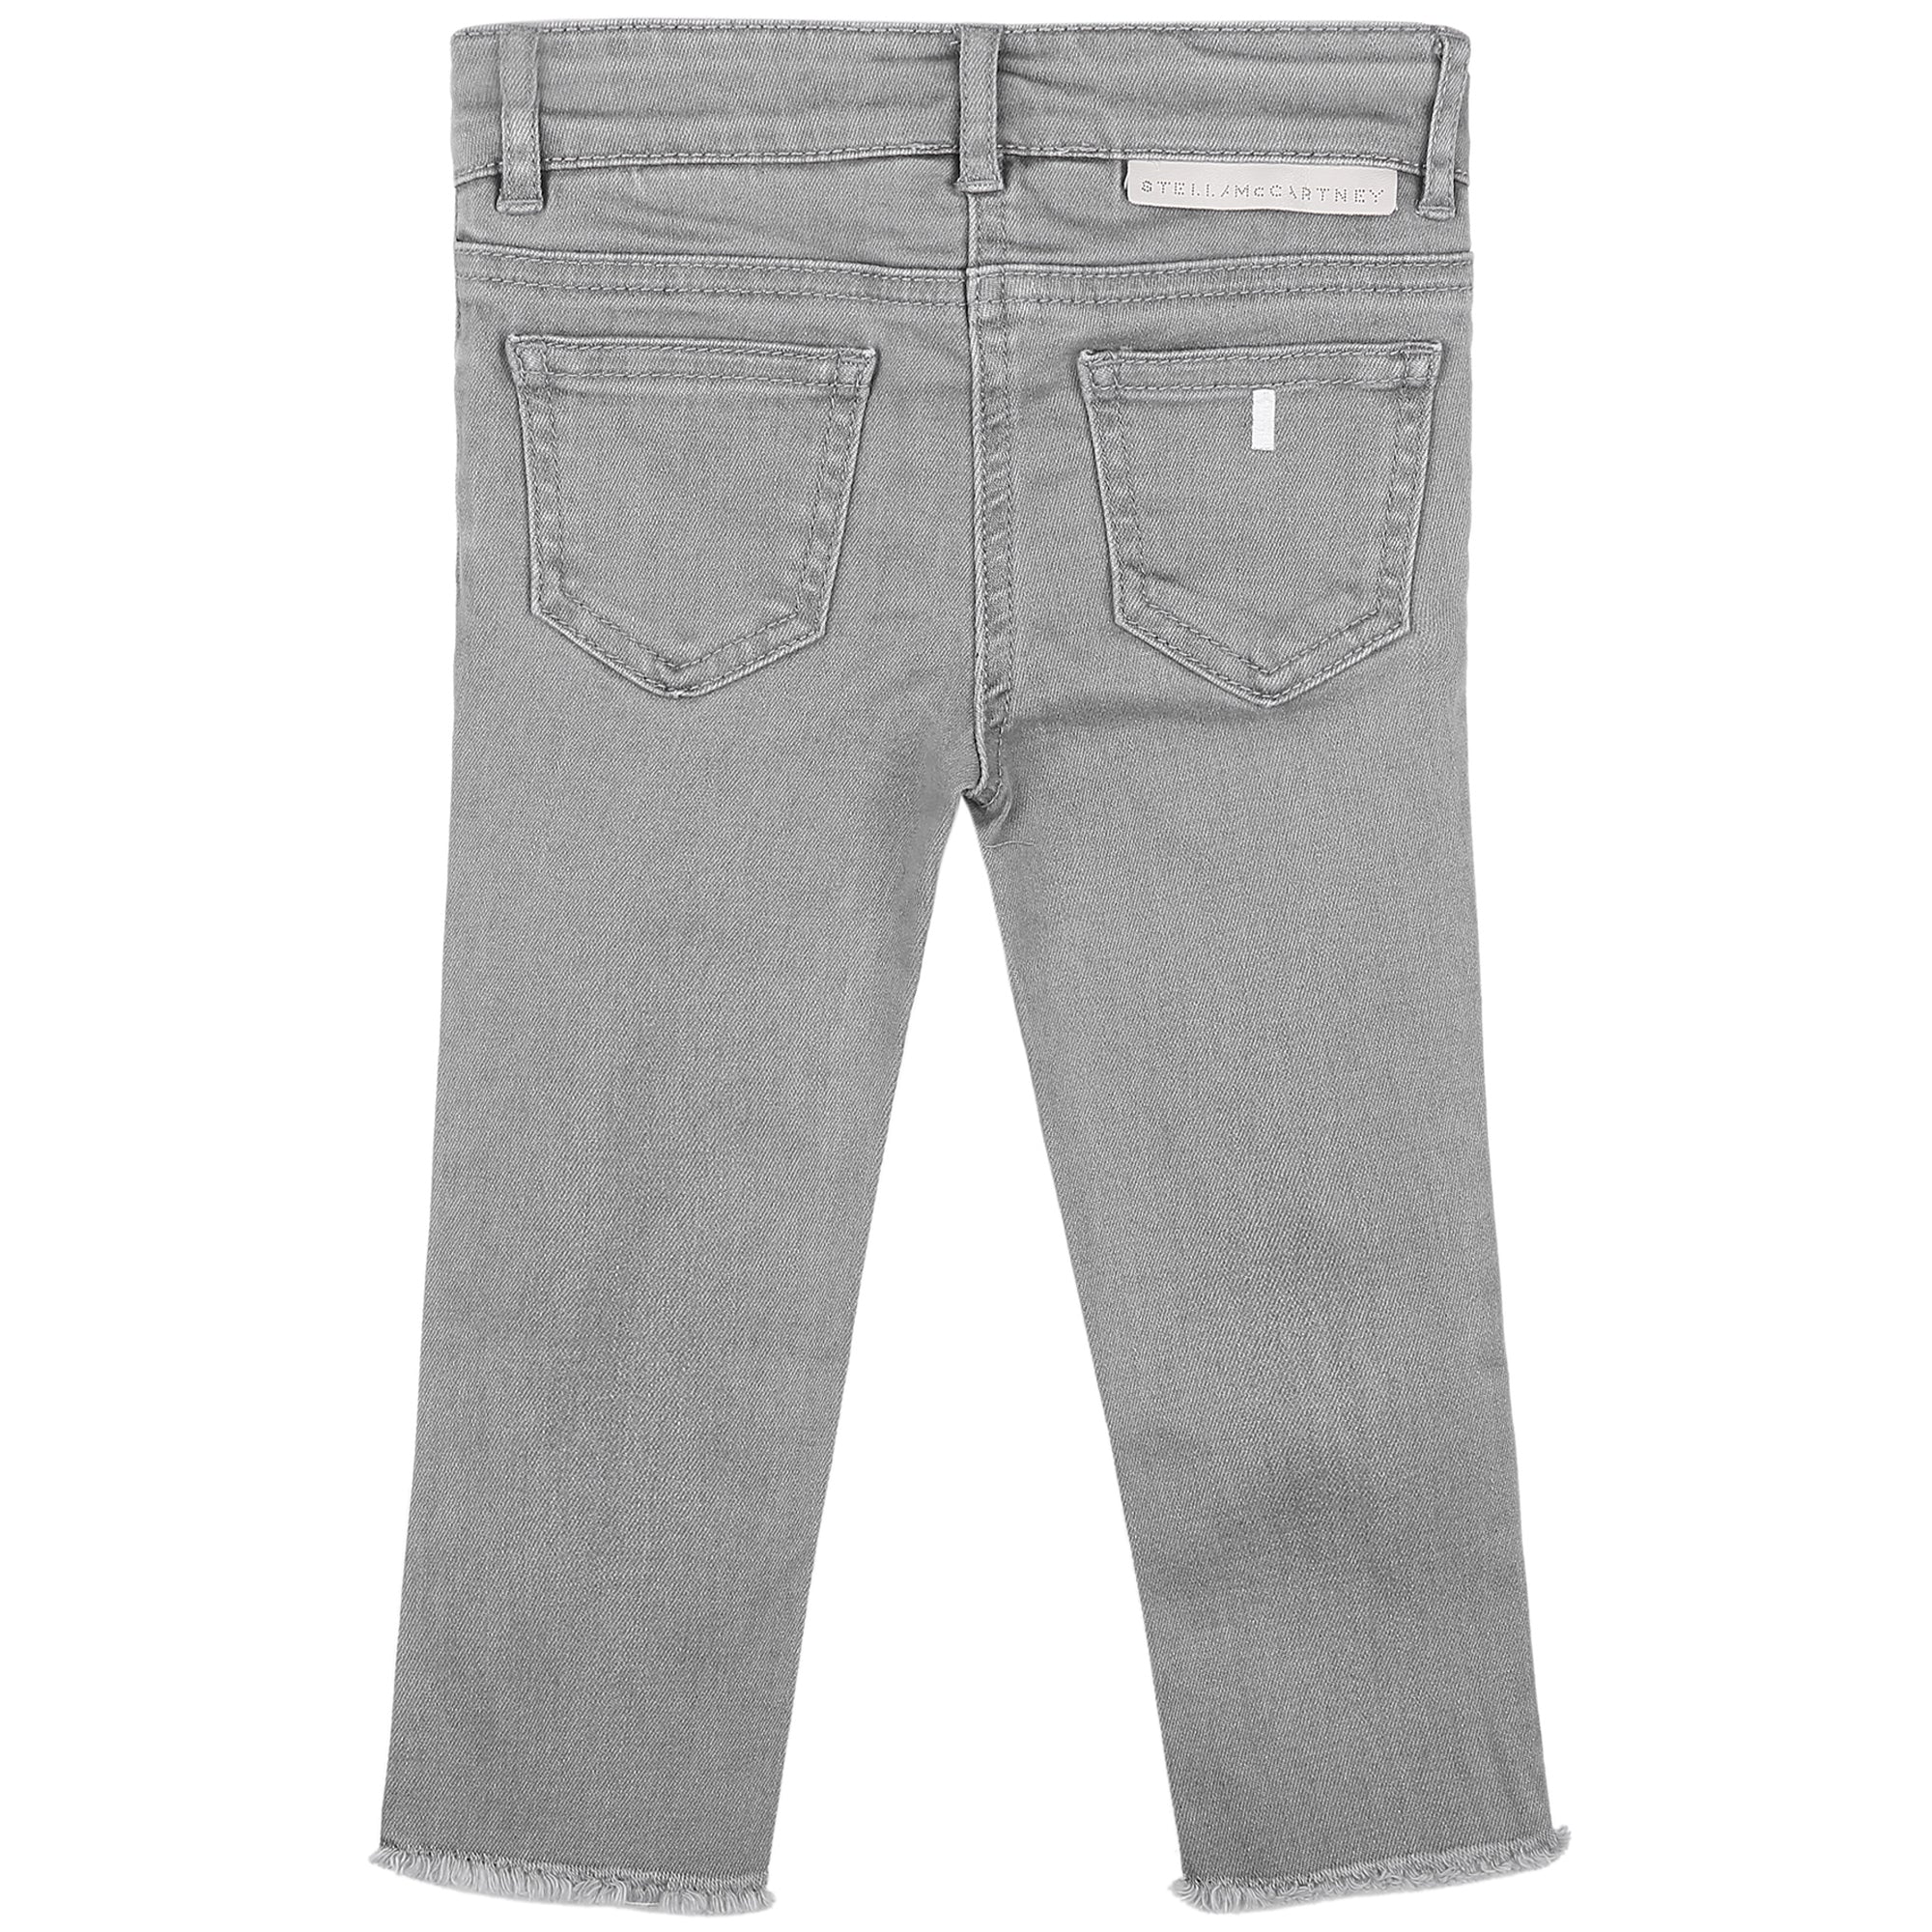 Girls Grey Cotton Jeans